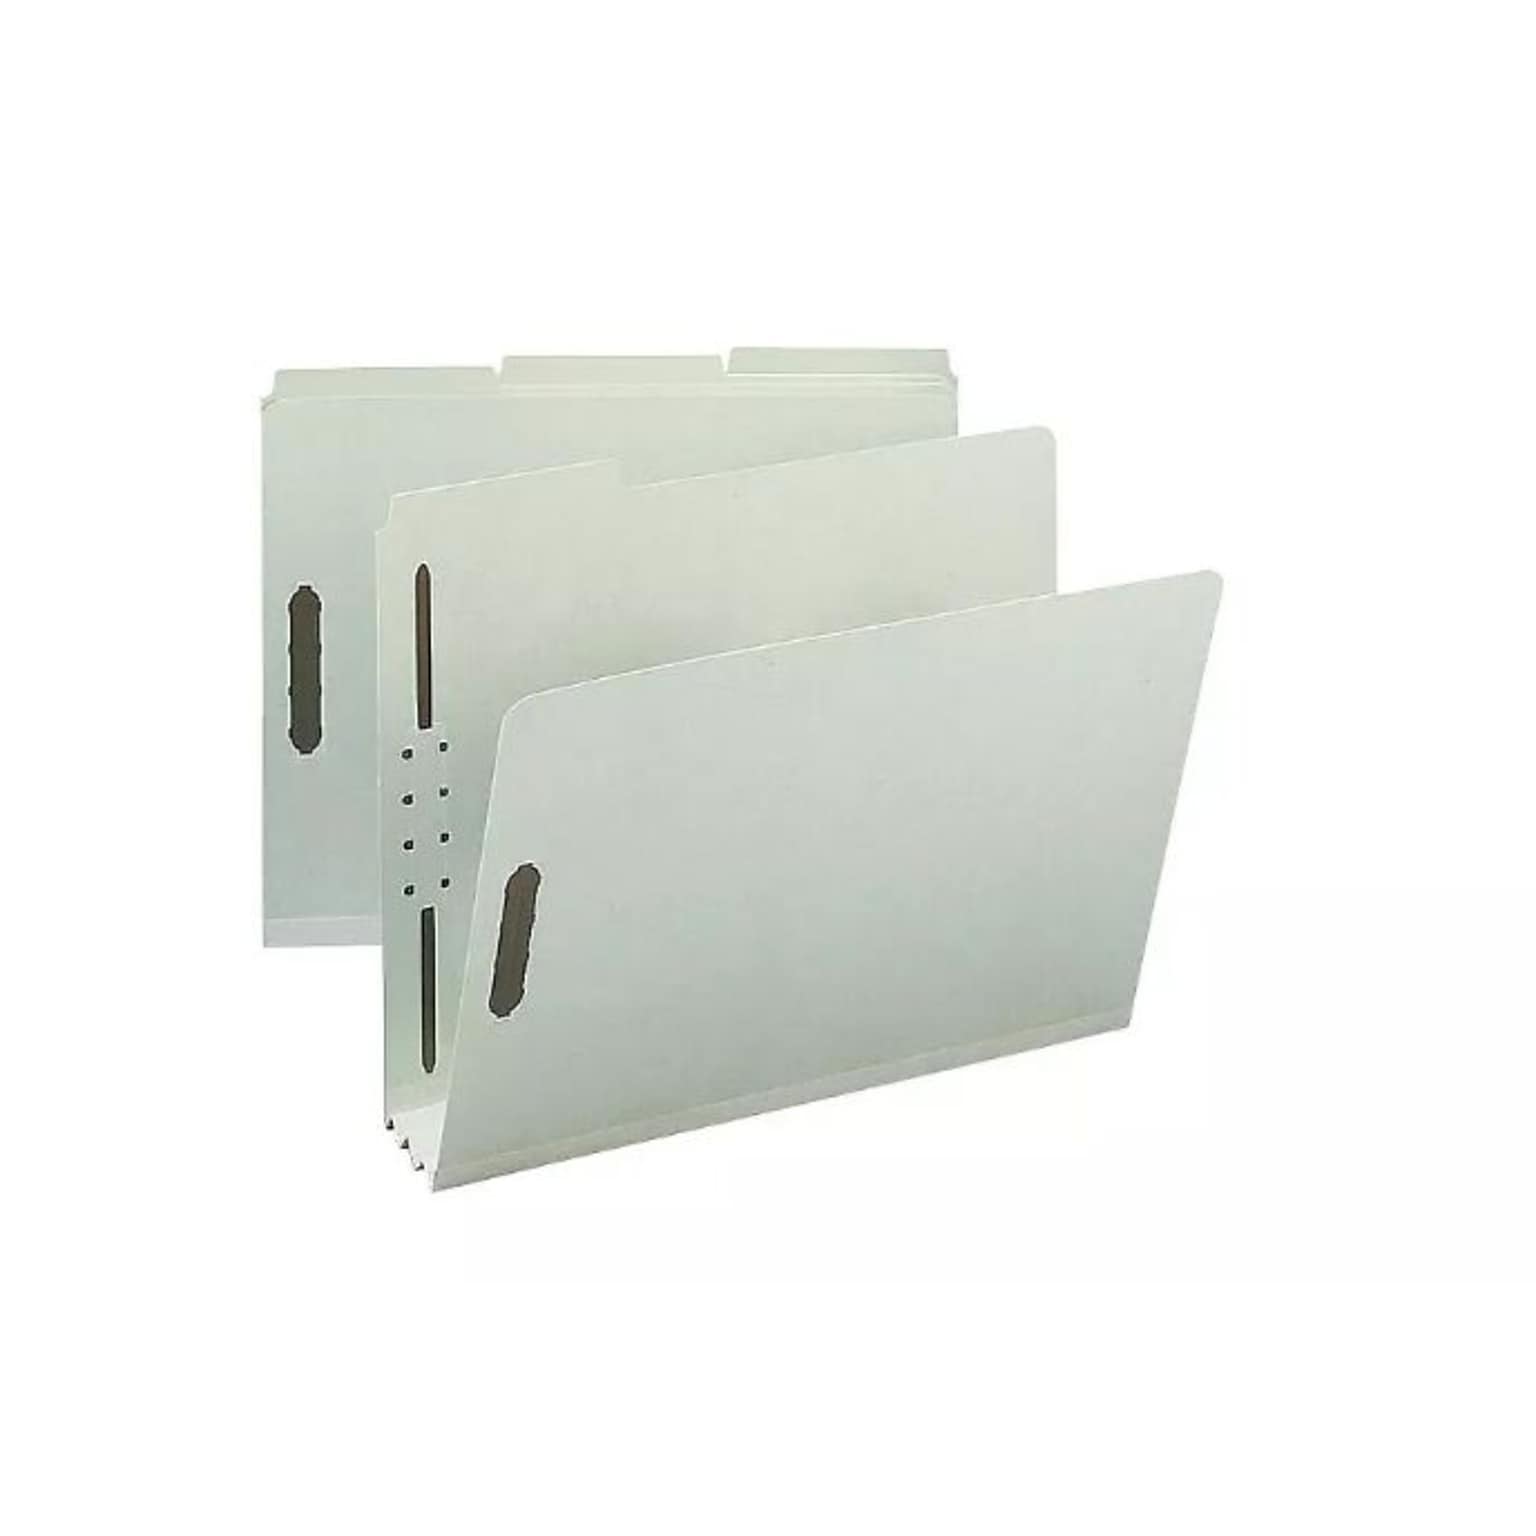 Recycled Pressboard Fastener Folders, Letter, , 3 Exp., Gray-Green, 25/Box (15005)